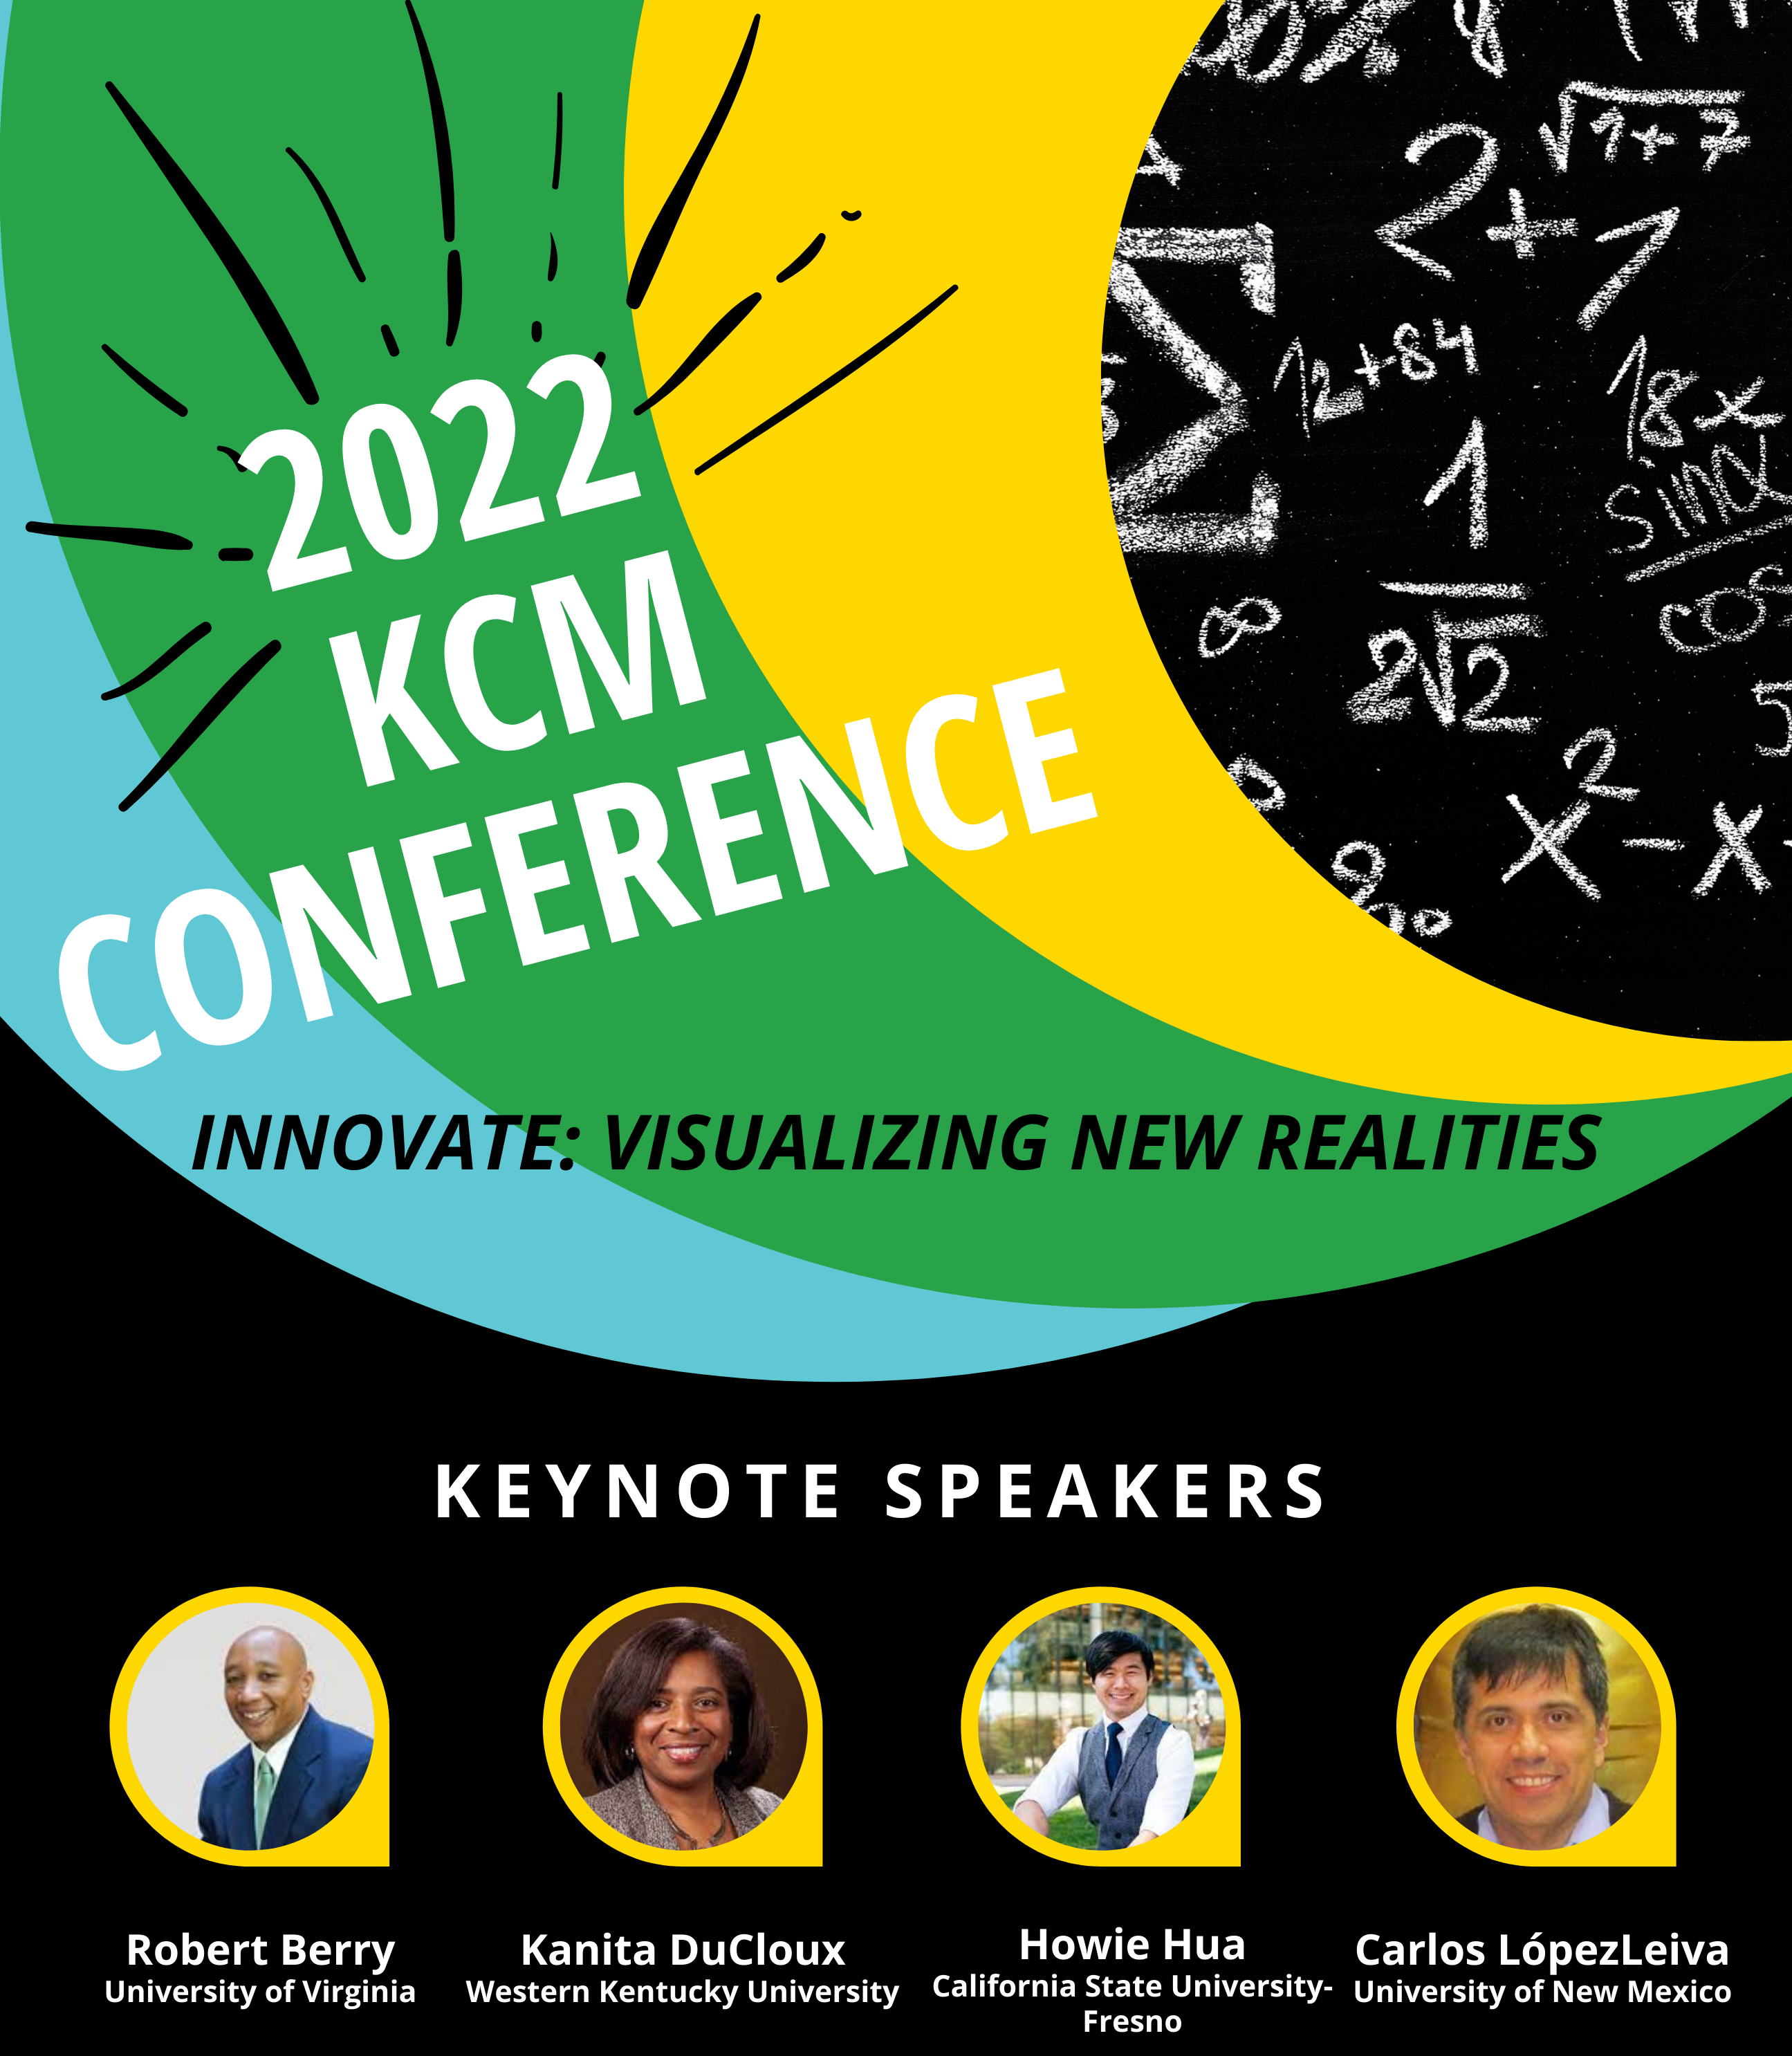 2022 KCM Virtual Conferece on March 6-8, 2022